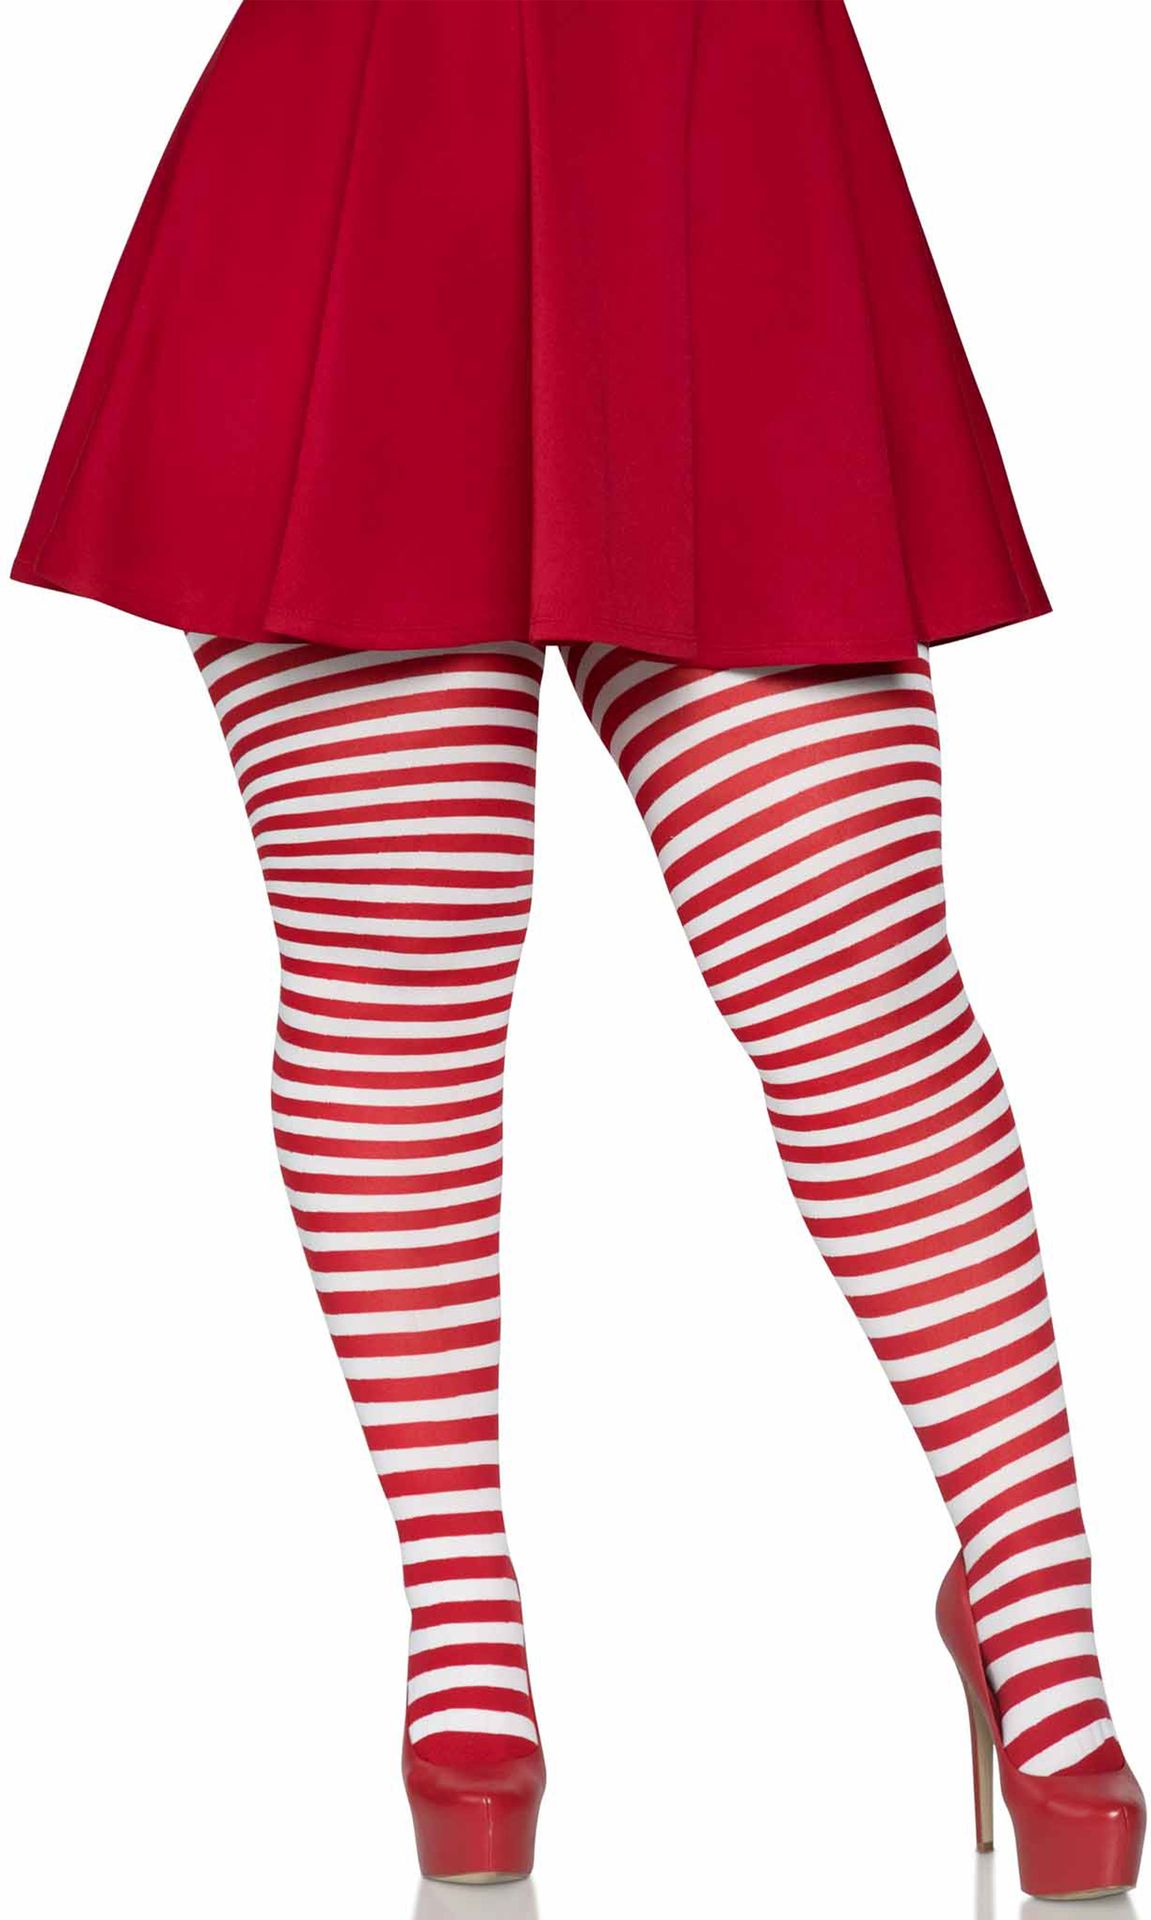 krijgen Touhou rand Rood wit gestreepte panty plus size | Carnavalskleding.nl